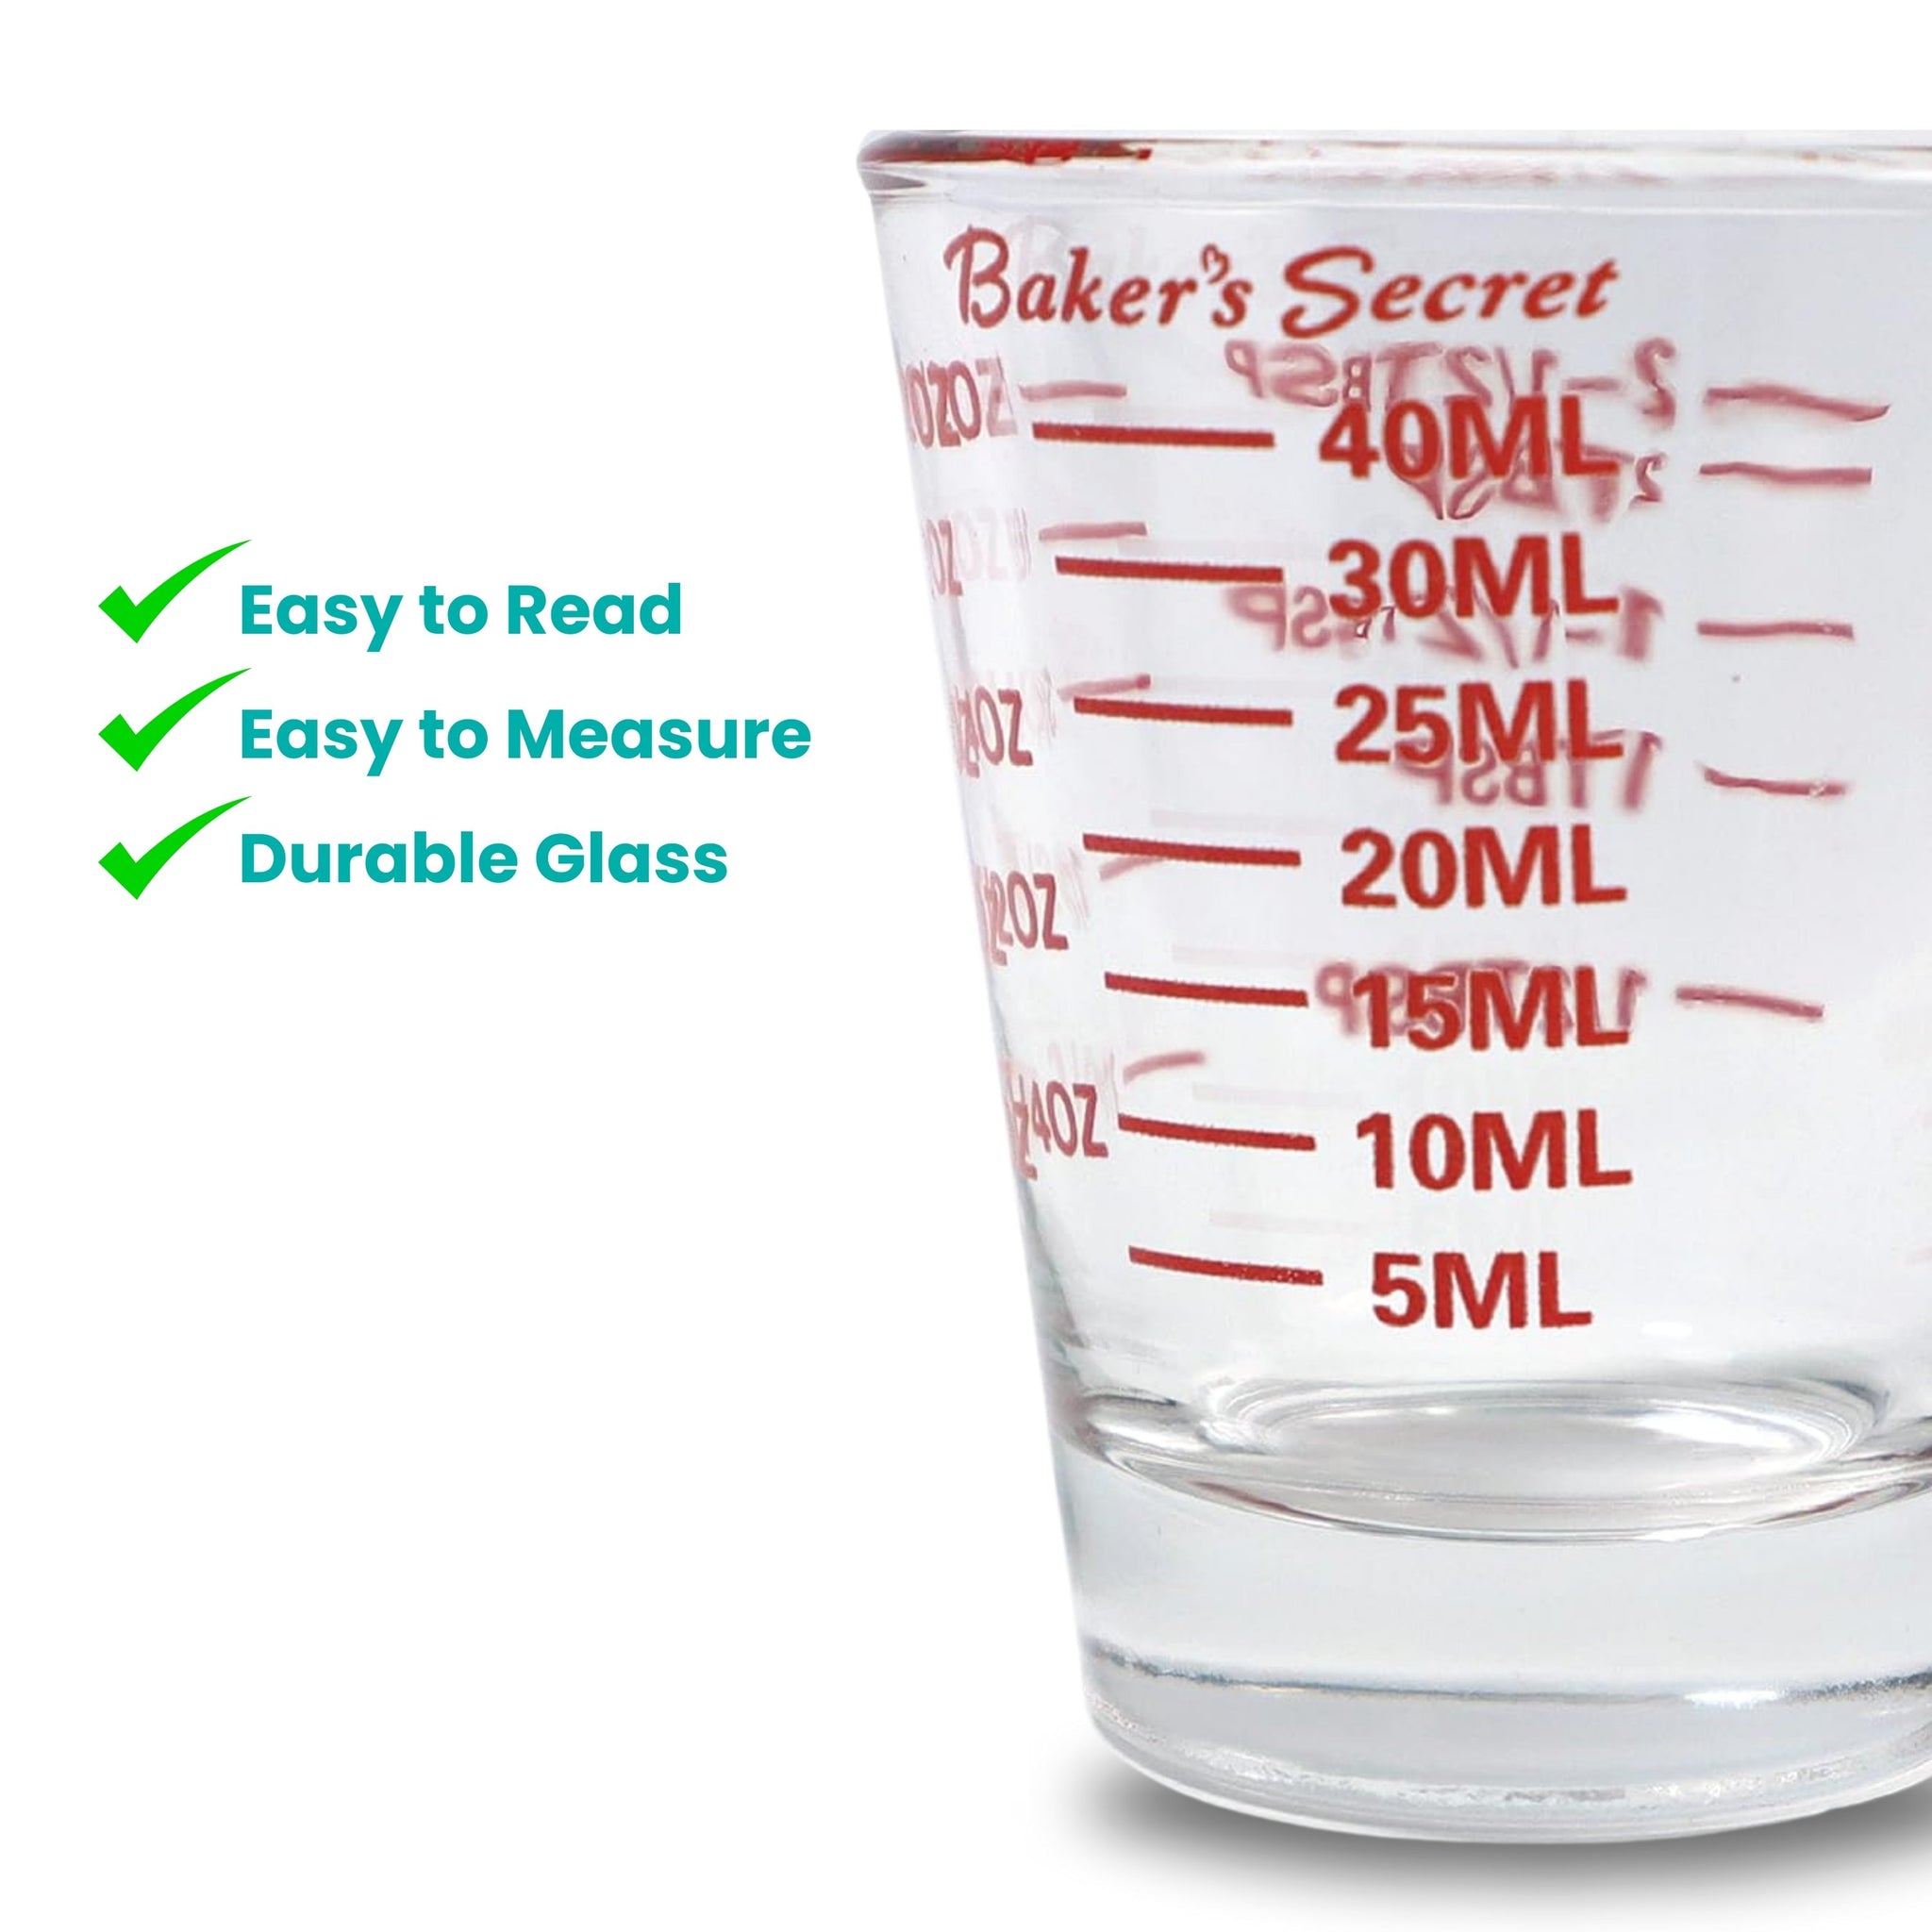 1.5oz Measuring Cup - Shot Glass  Cookware Accessories - Baker's Secret